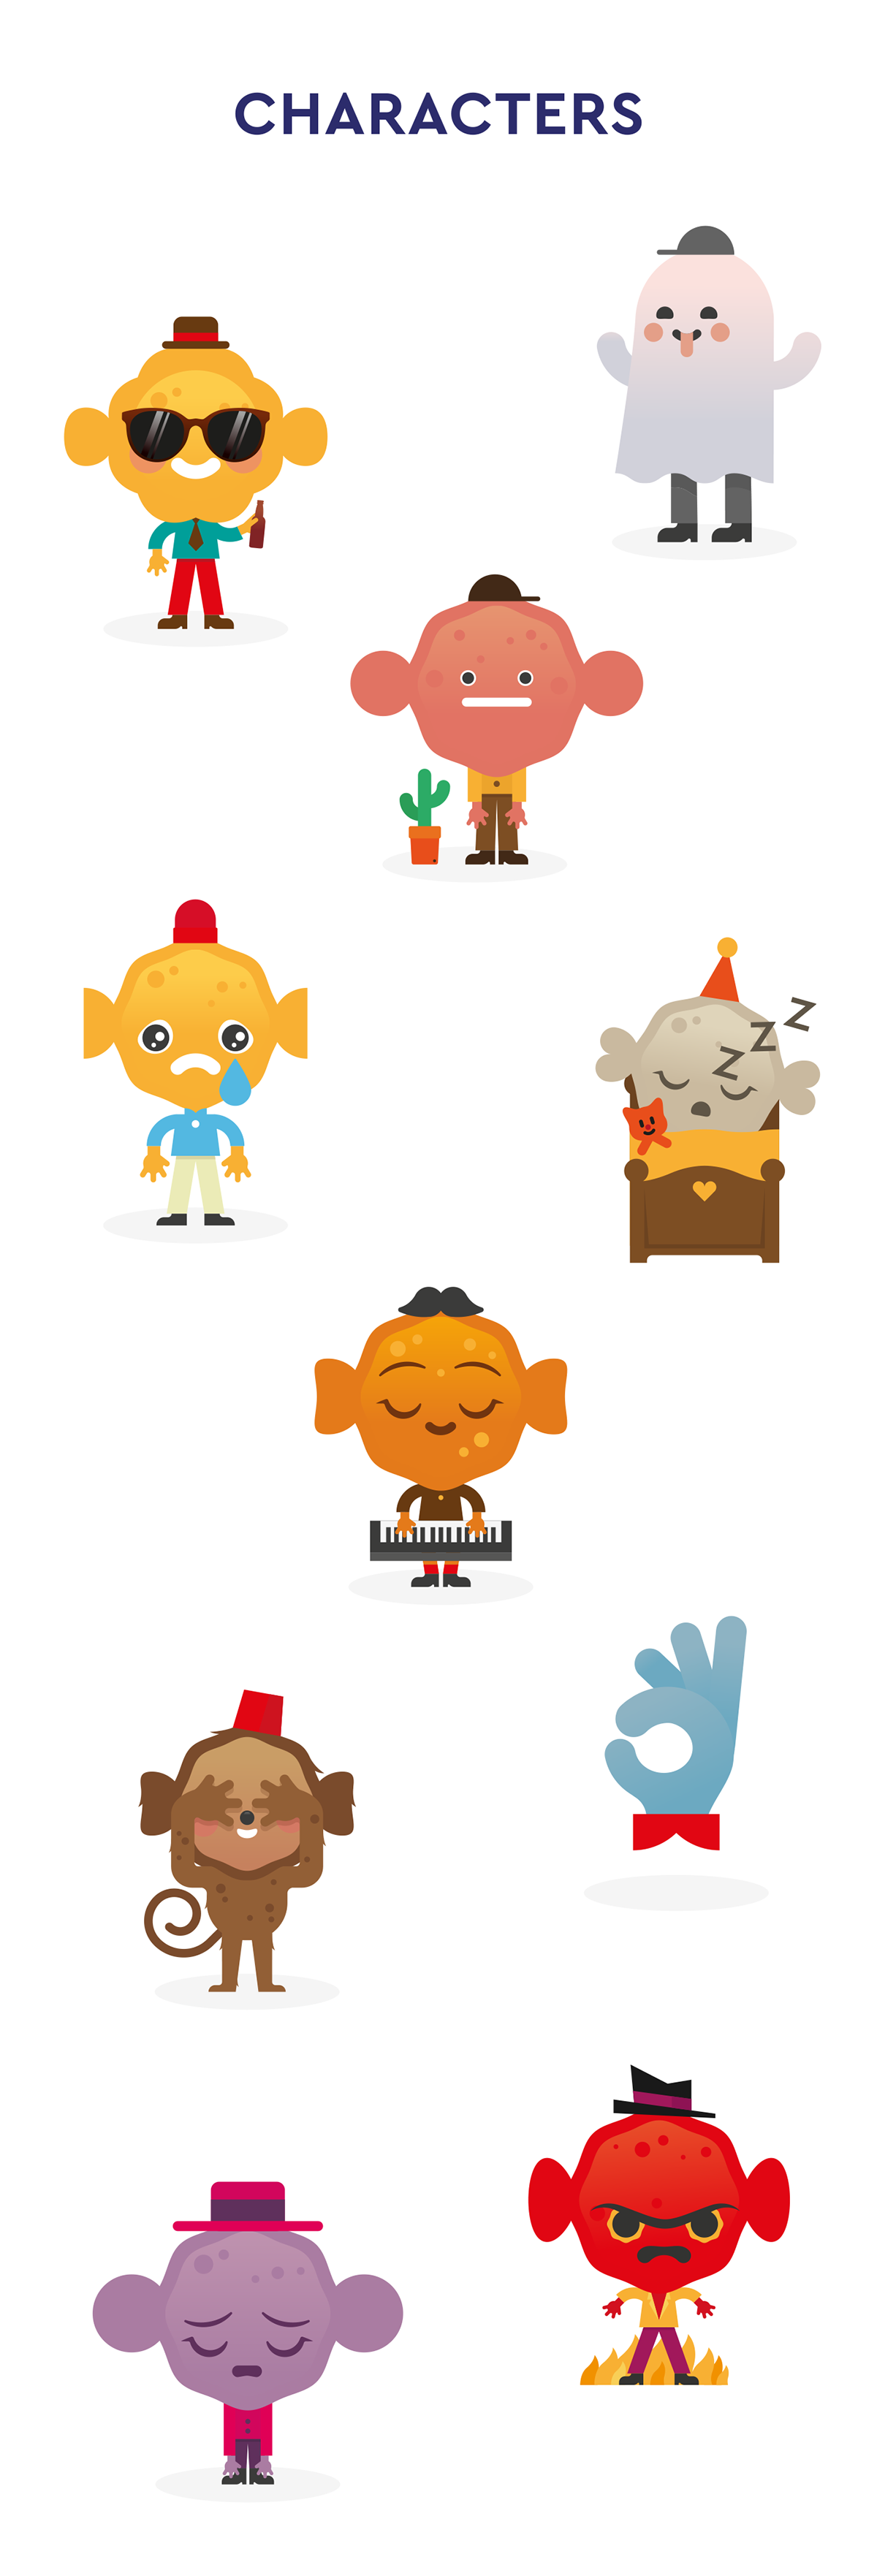 ios app imessage icons Emoji emoticons stickers Pack conversation